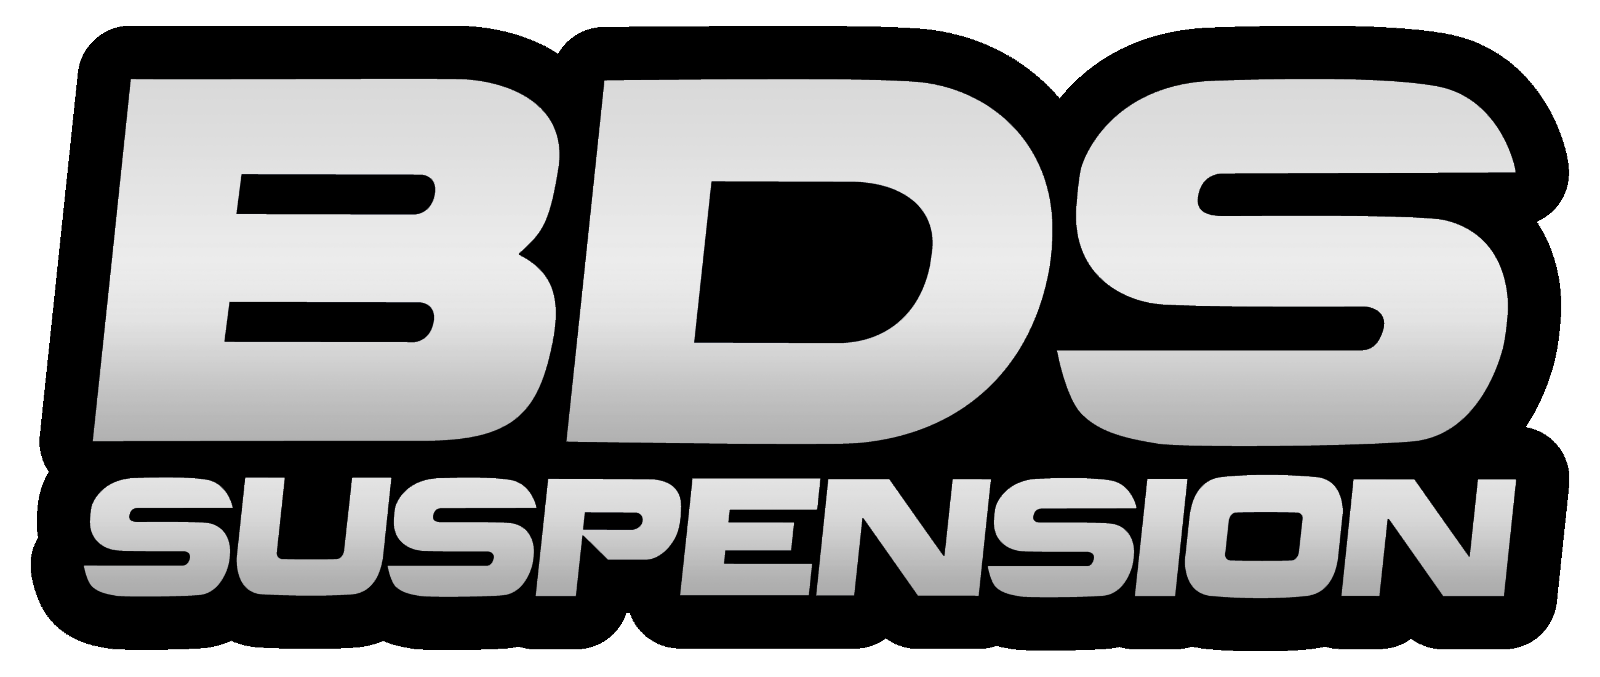 BDS BDS1657FPE 4 Inch Lift Kit w/ Radius Arm - 3 Inch Rear Block - Ram 3500 (19-24) 4WD - Diesel